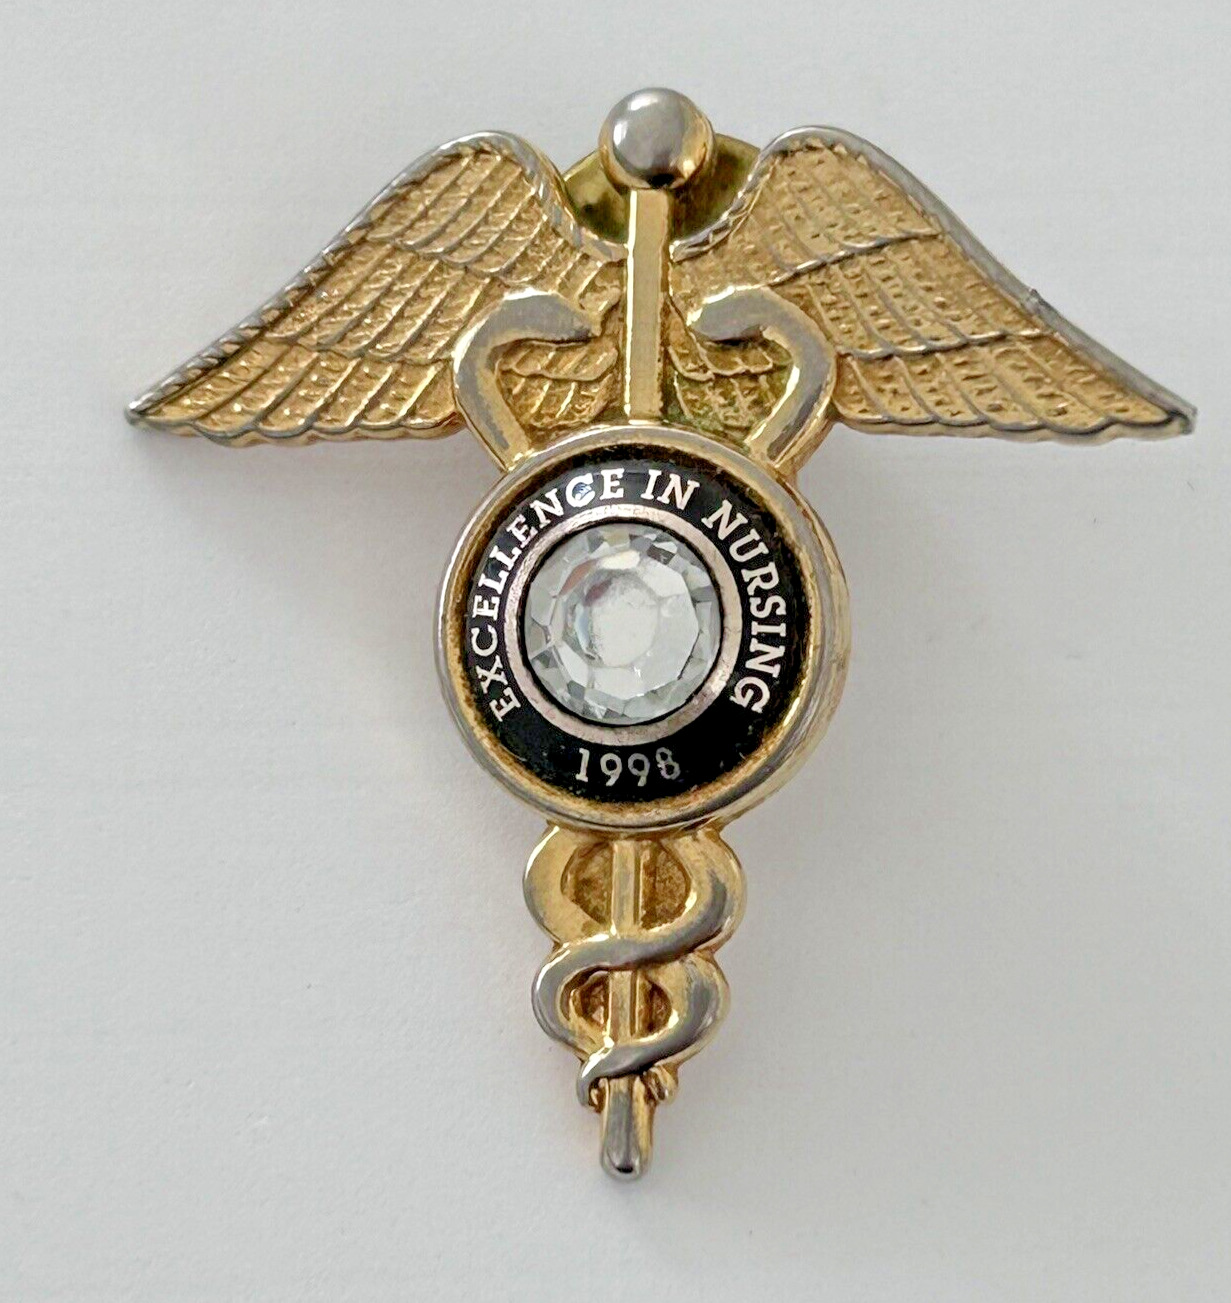 Excellence In Nursing Lapel Pin Vintage 1998 Medical Logo Hospital